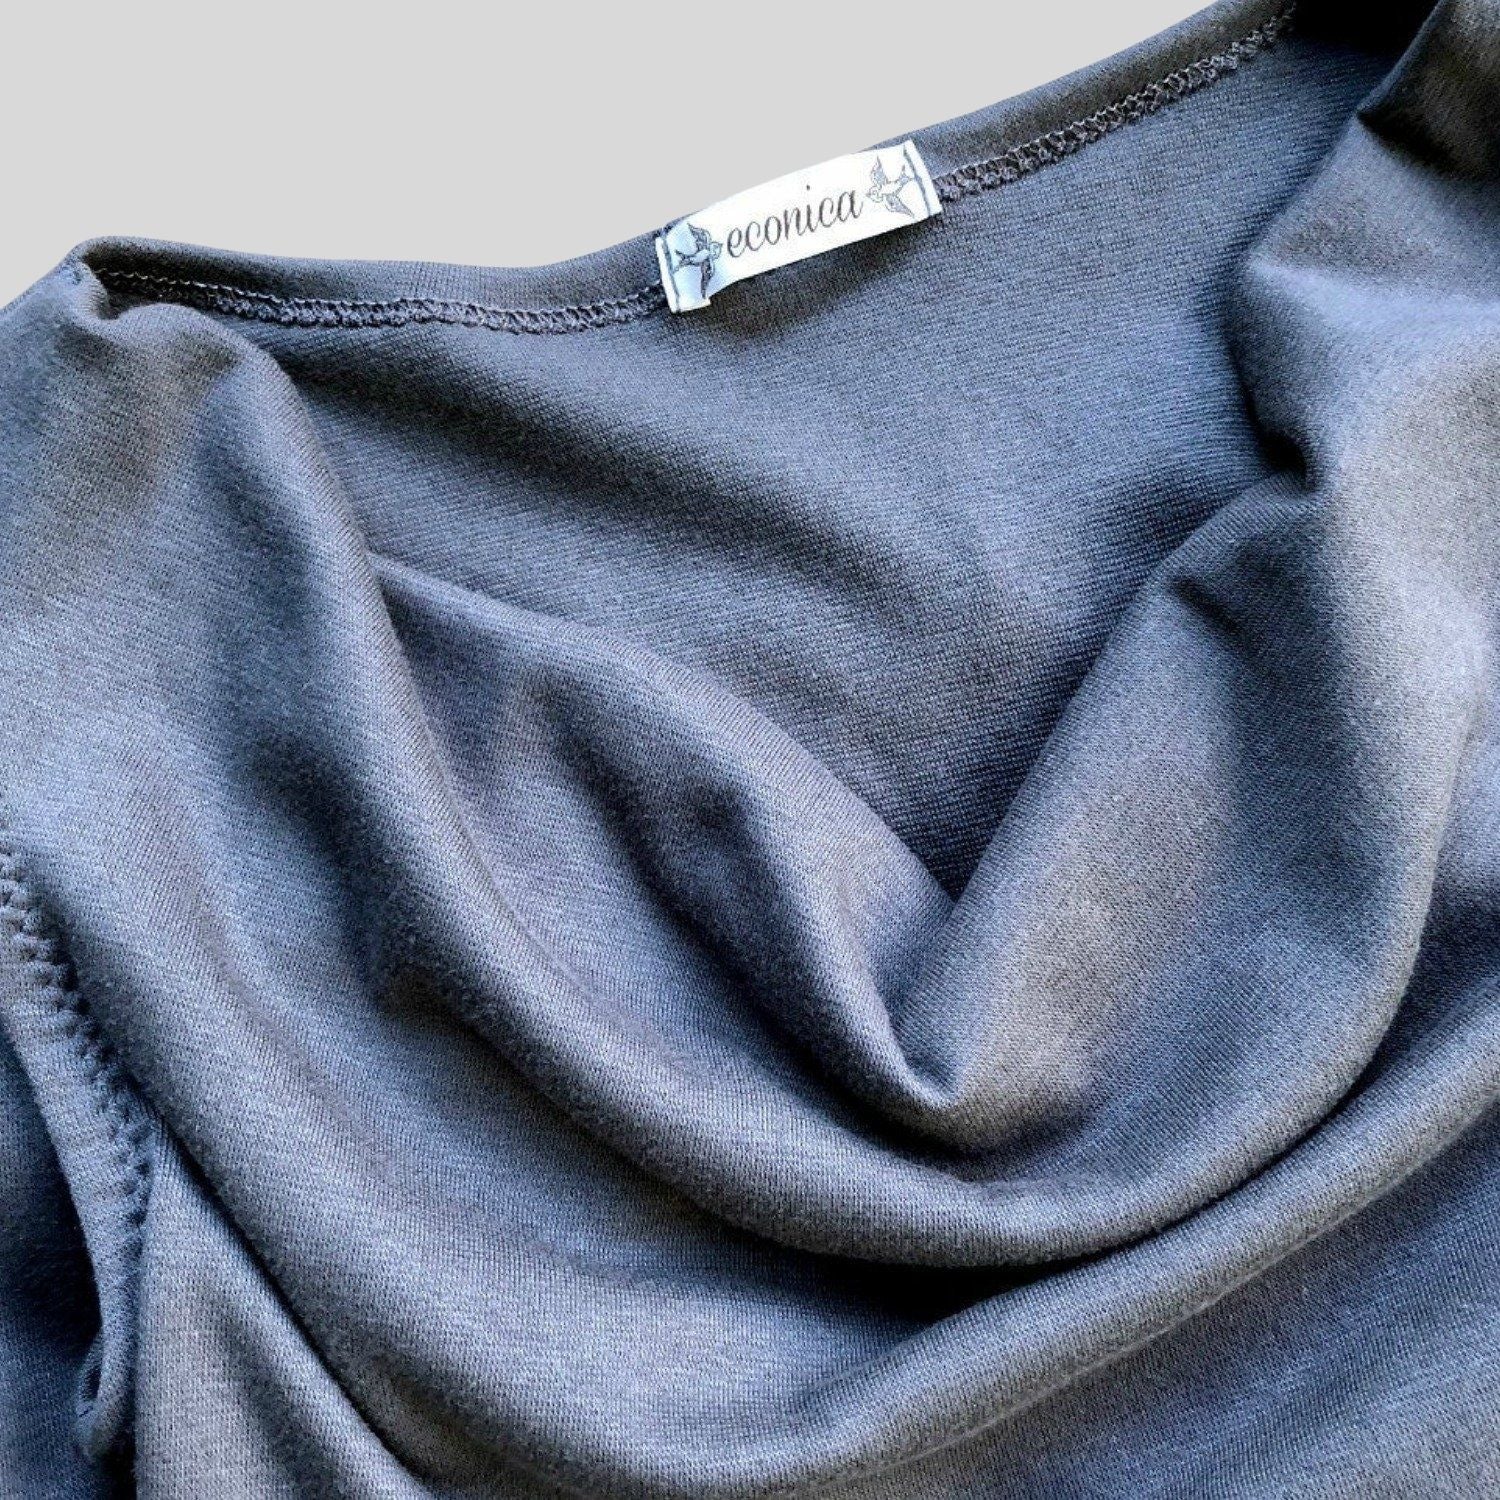 Grey organic cotton dress | Long sleeveless boatneck dress | Buy made in Canada organic cotton dresses